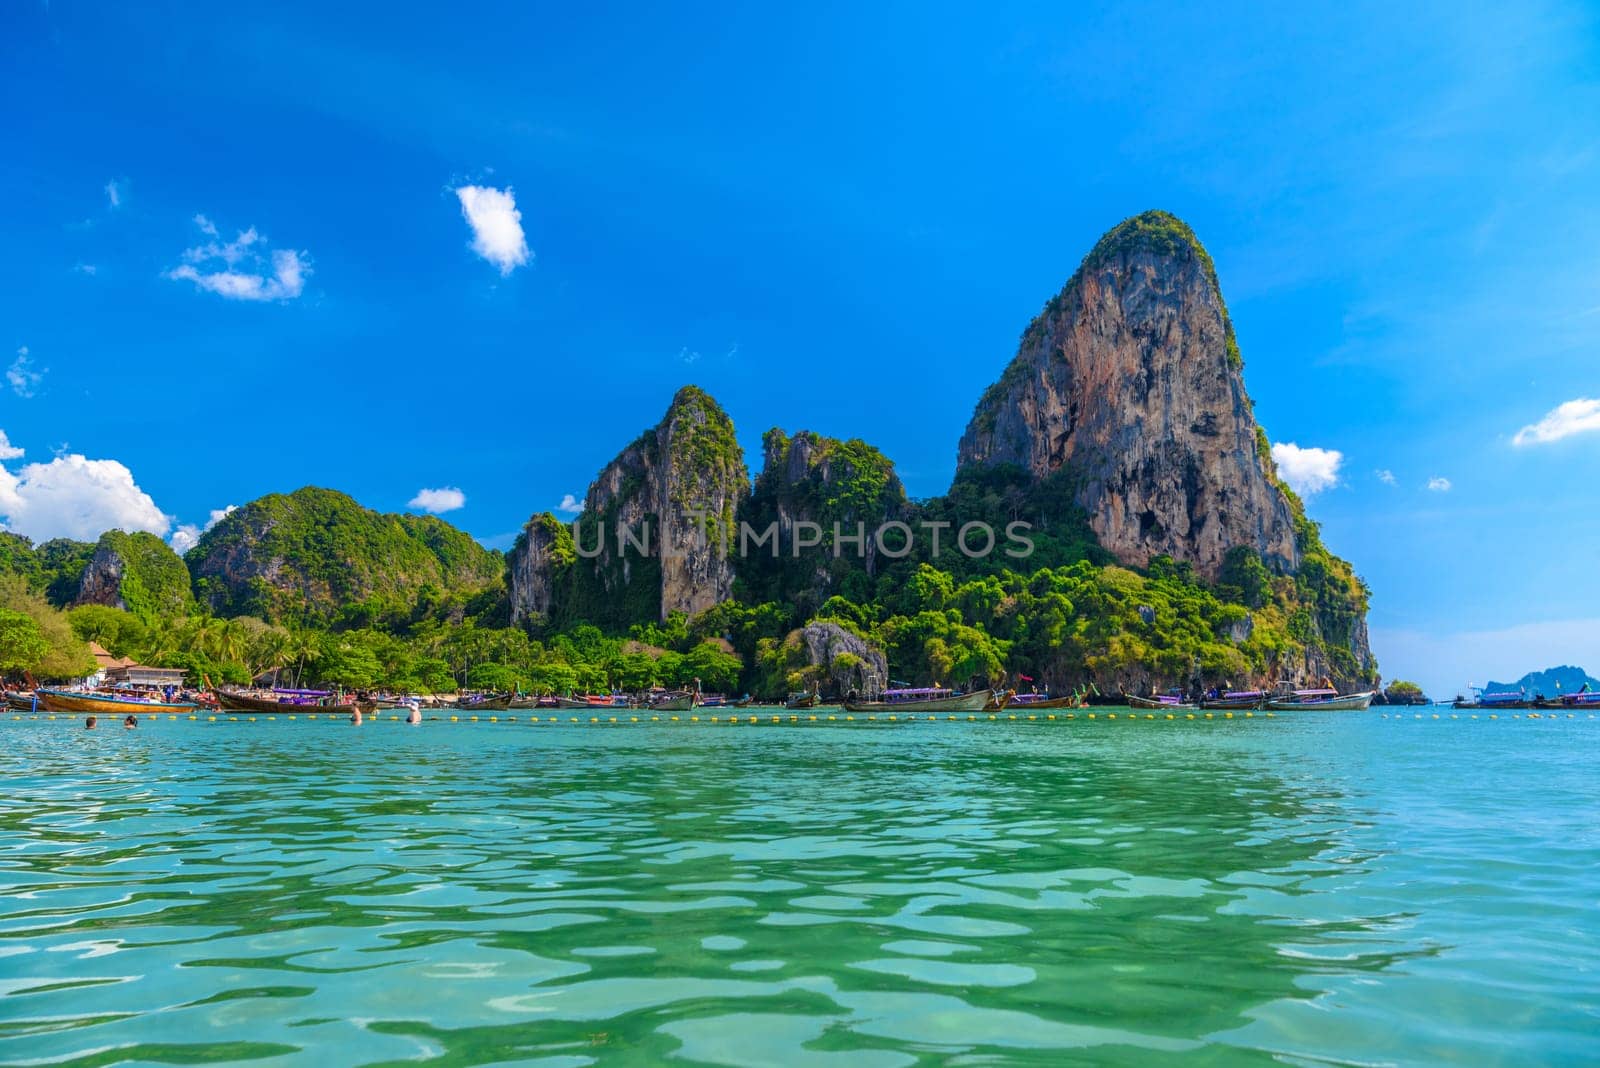 Rocks and cliffs, water and tropical white sand beach, Railay beach west, Ao Nang, Krabi, Thailand by Eagle2308